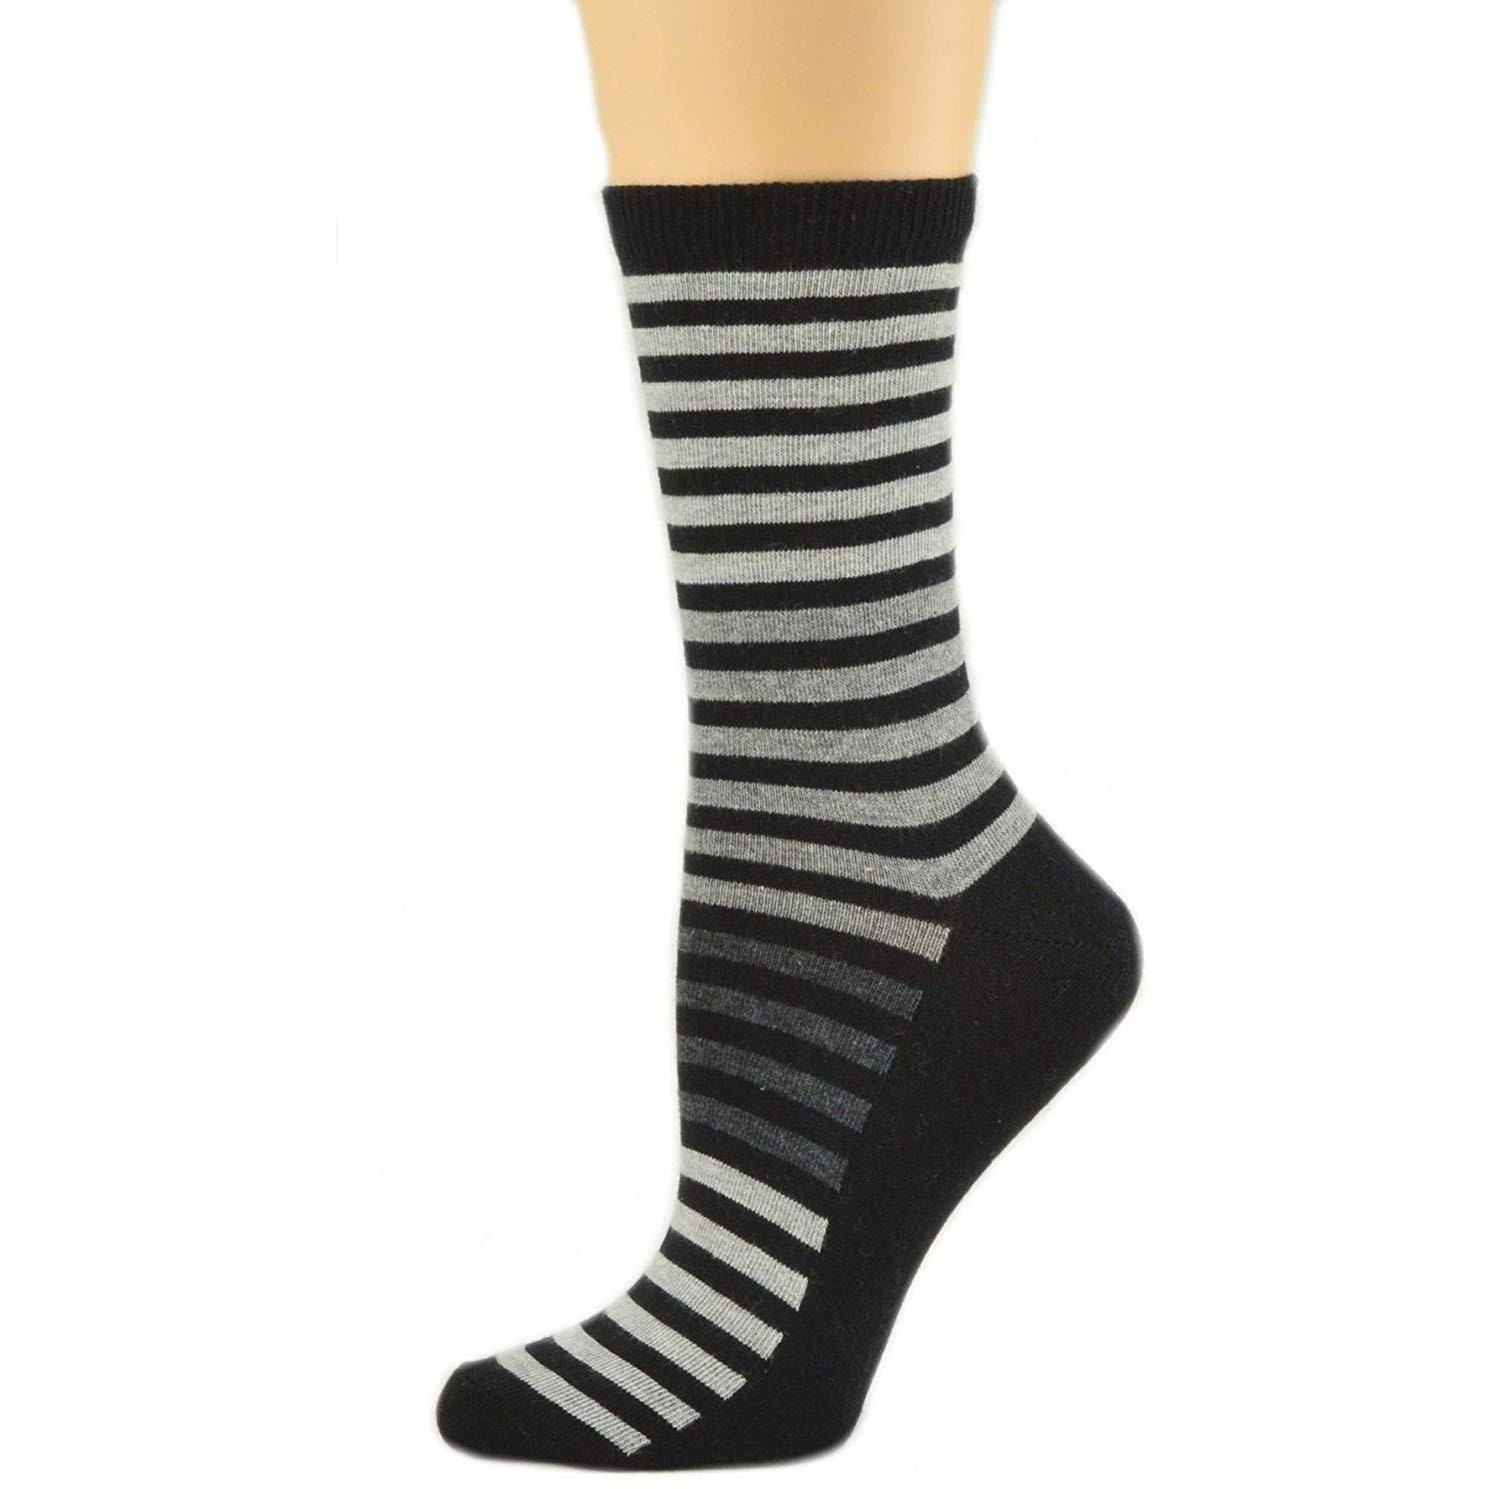 Sierra Socks Women's Striped Cotton 1 Pair or 3 Pair Pack - Etsy